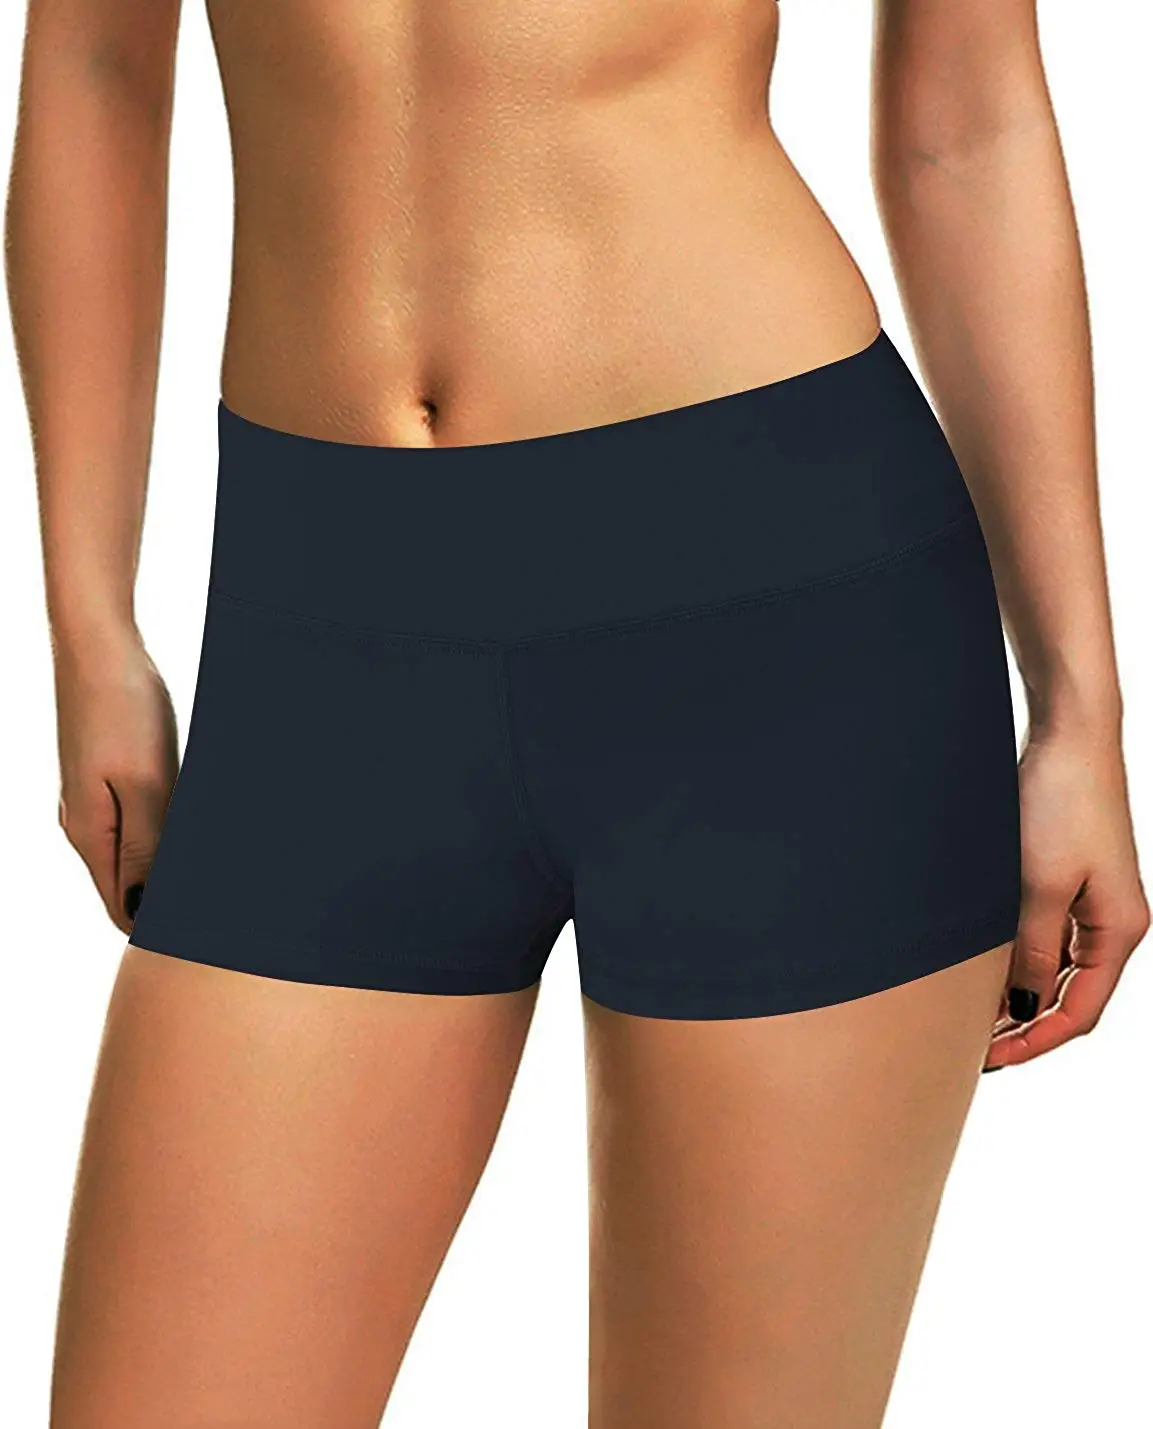 Cheap Mini Yoga Shorts, find Mini Yoga Shorts deals on line at Alibaba.com